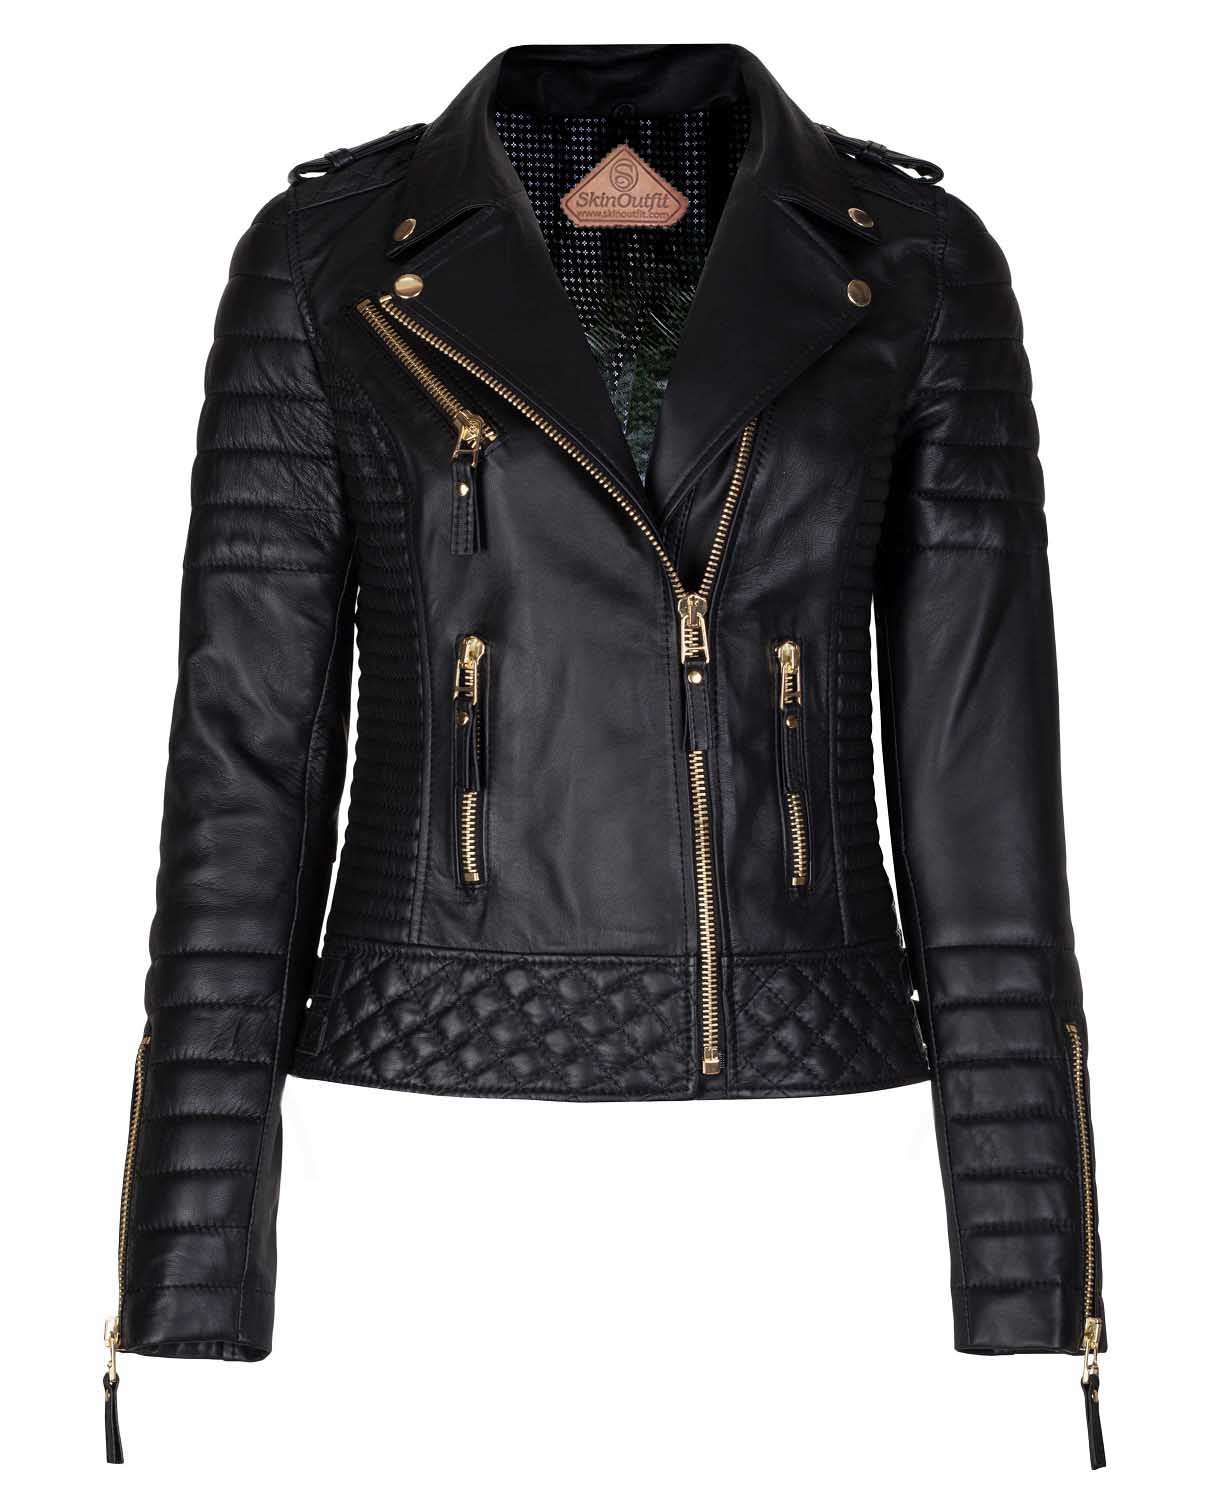 Skinoutfit Women's Biker Leather Jacket Black Gold Zipper Large